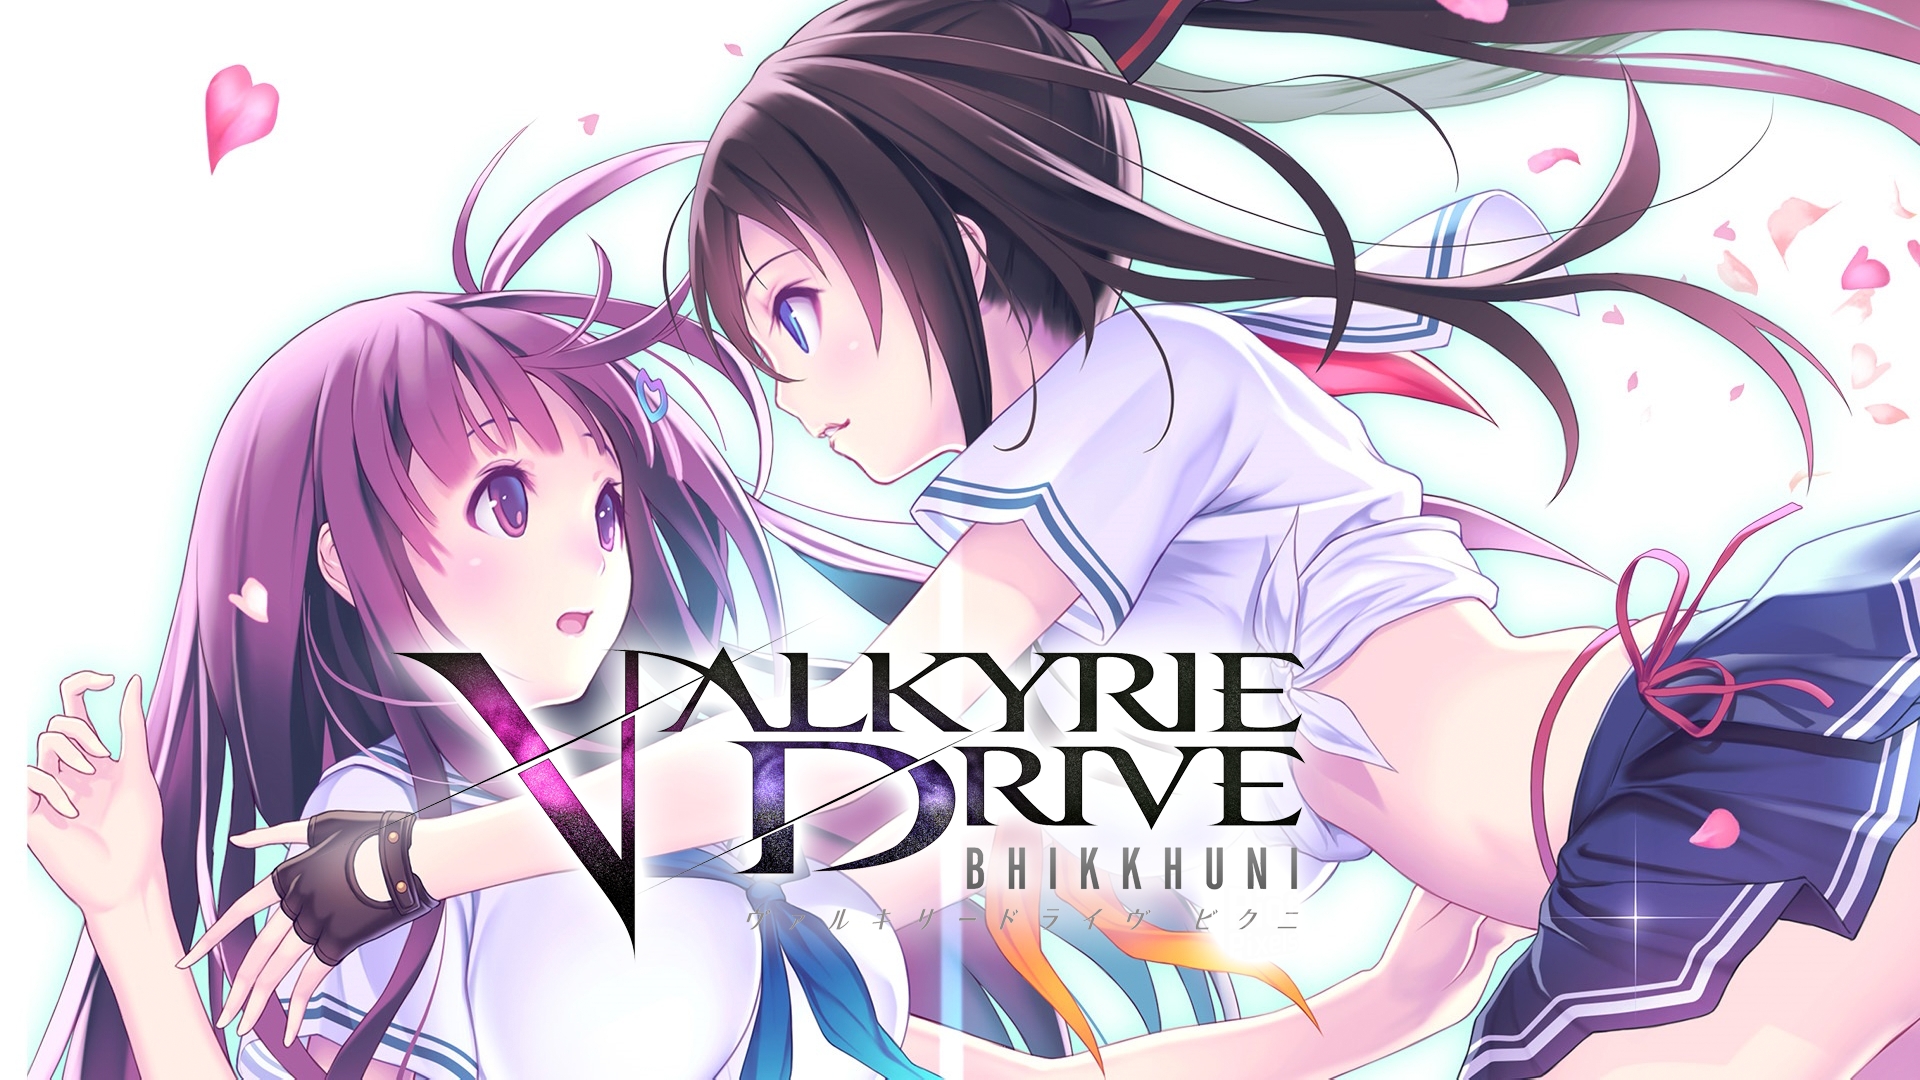 Valkyrie Drive: Bhikkhuni for PC launches June 20 - Gematsu